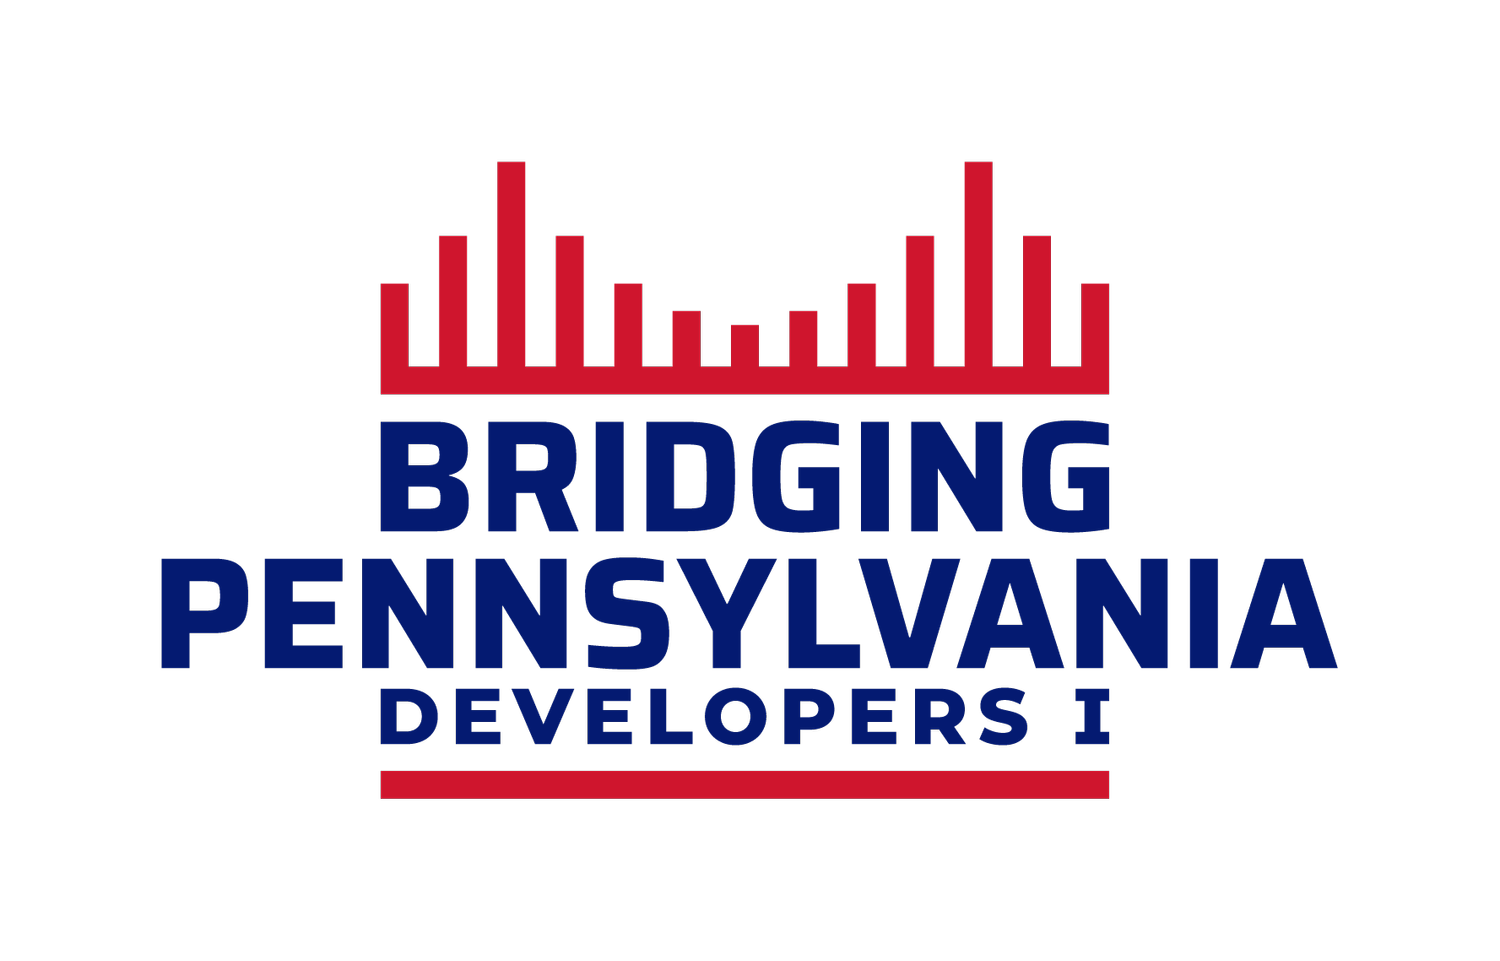 Bridging Pennsylvania Developers – I